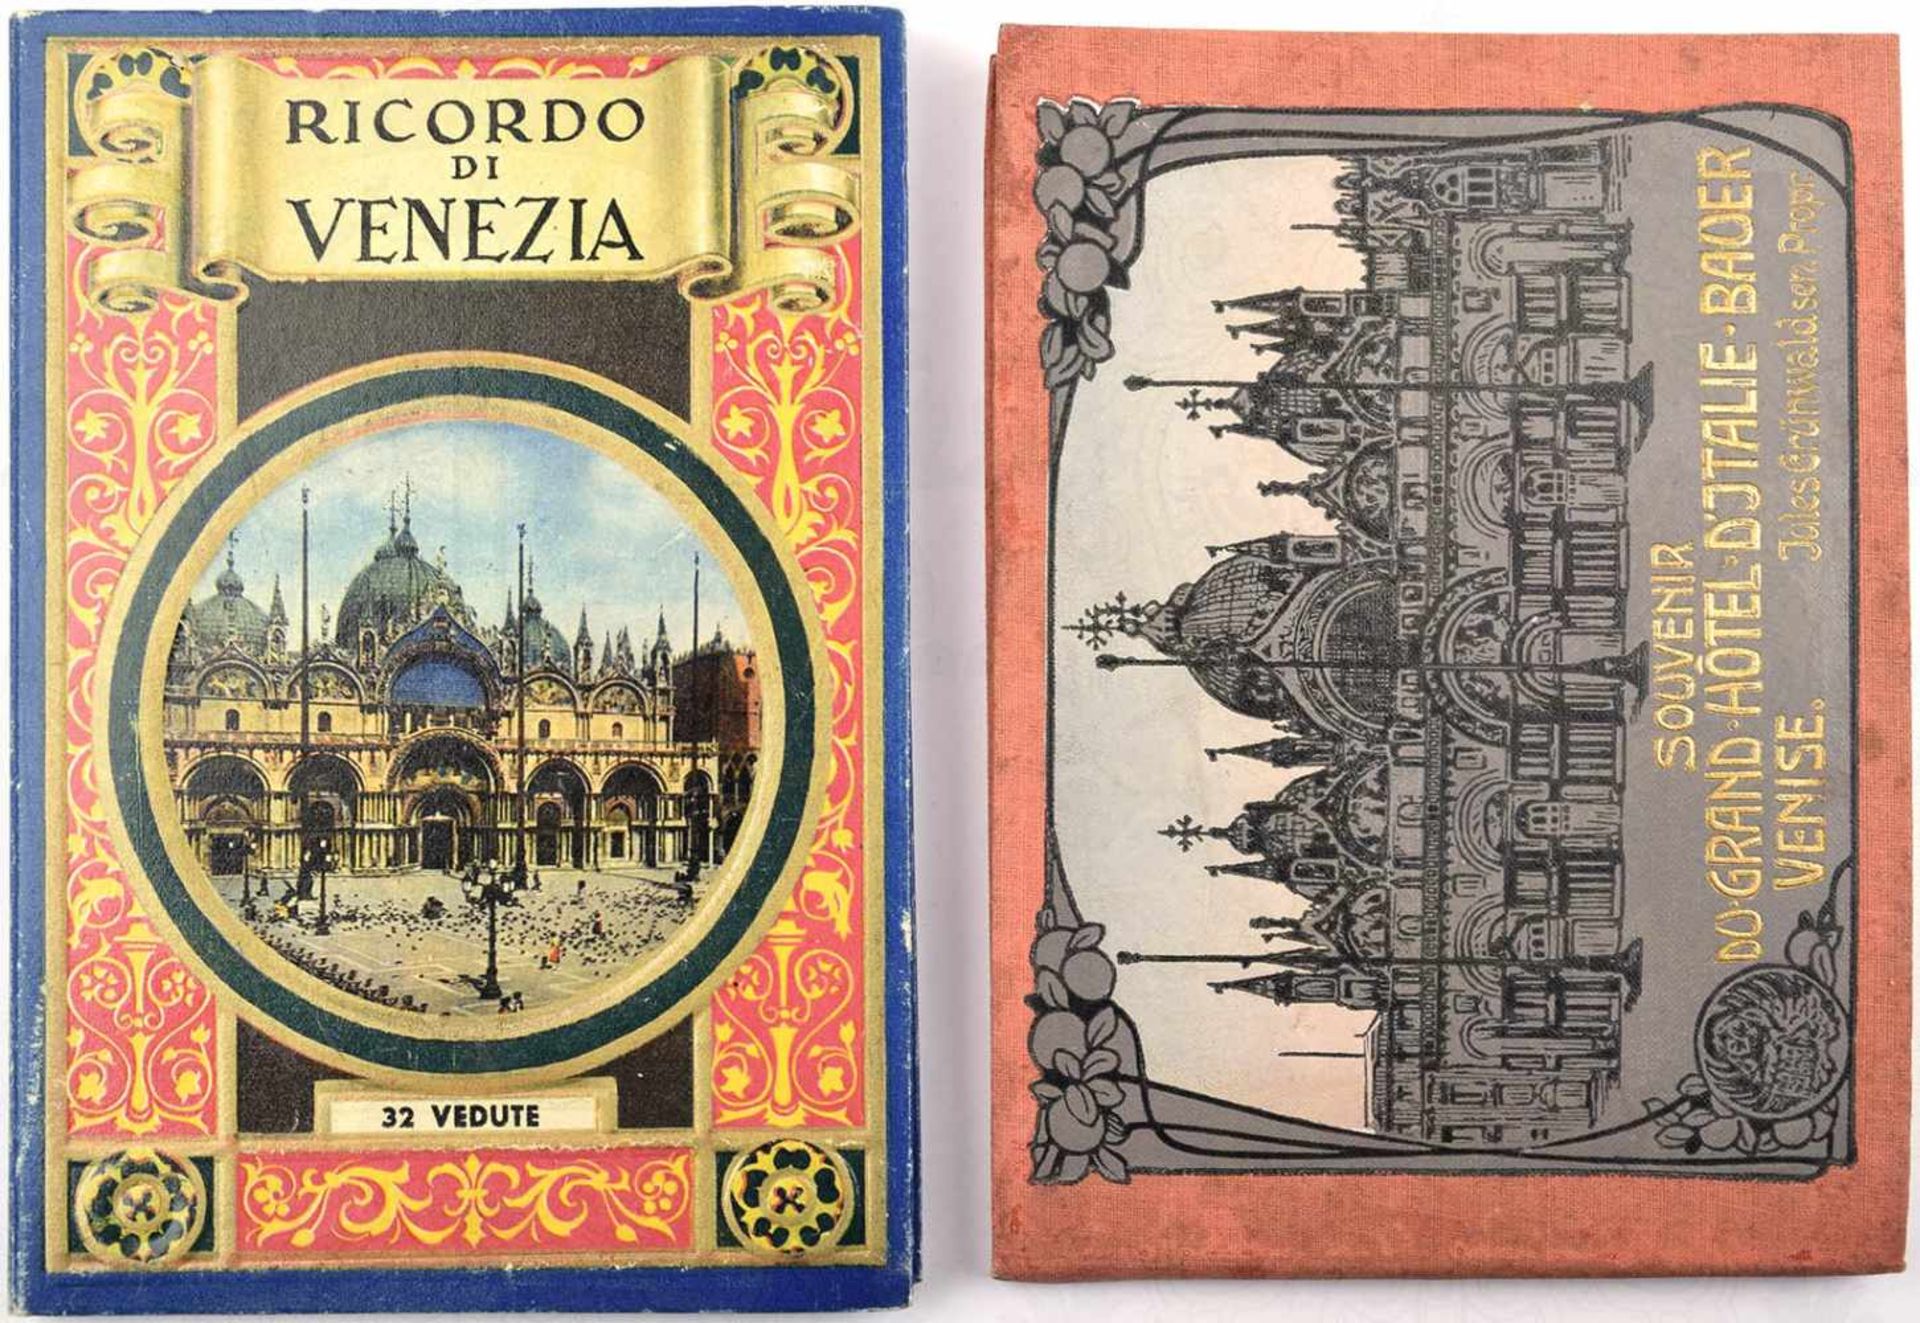 2 LEPORELLOS VENEDIG, ges. 52 Veduten, 1902, dabei: 1 Panoramabild von Venedig, Basilika San